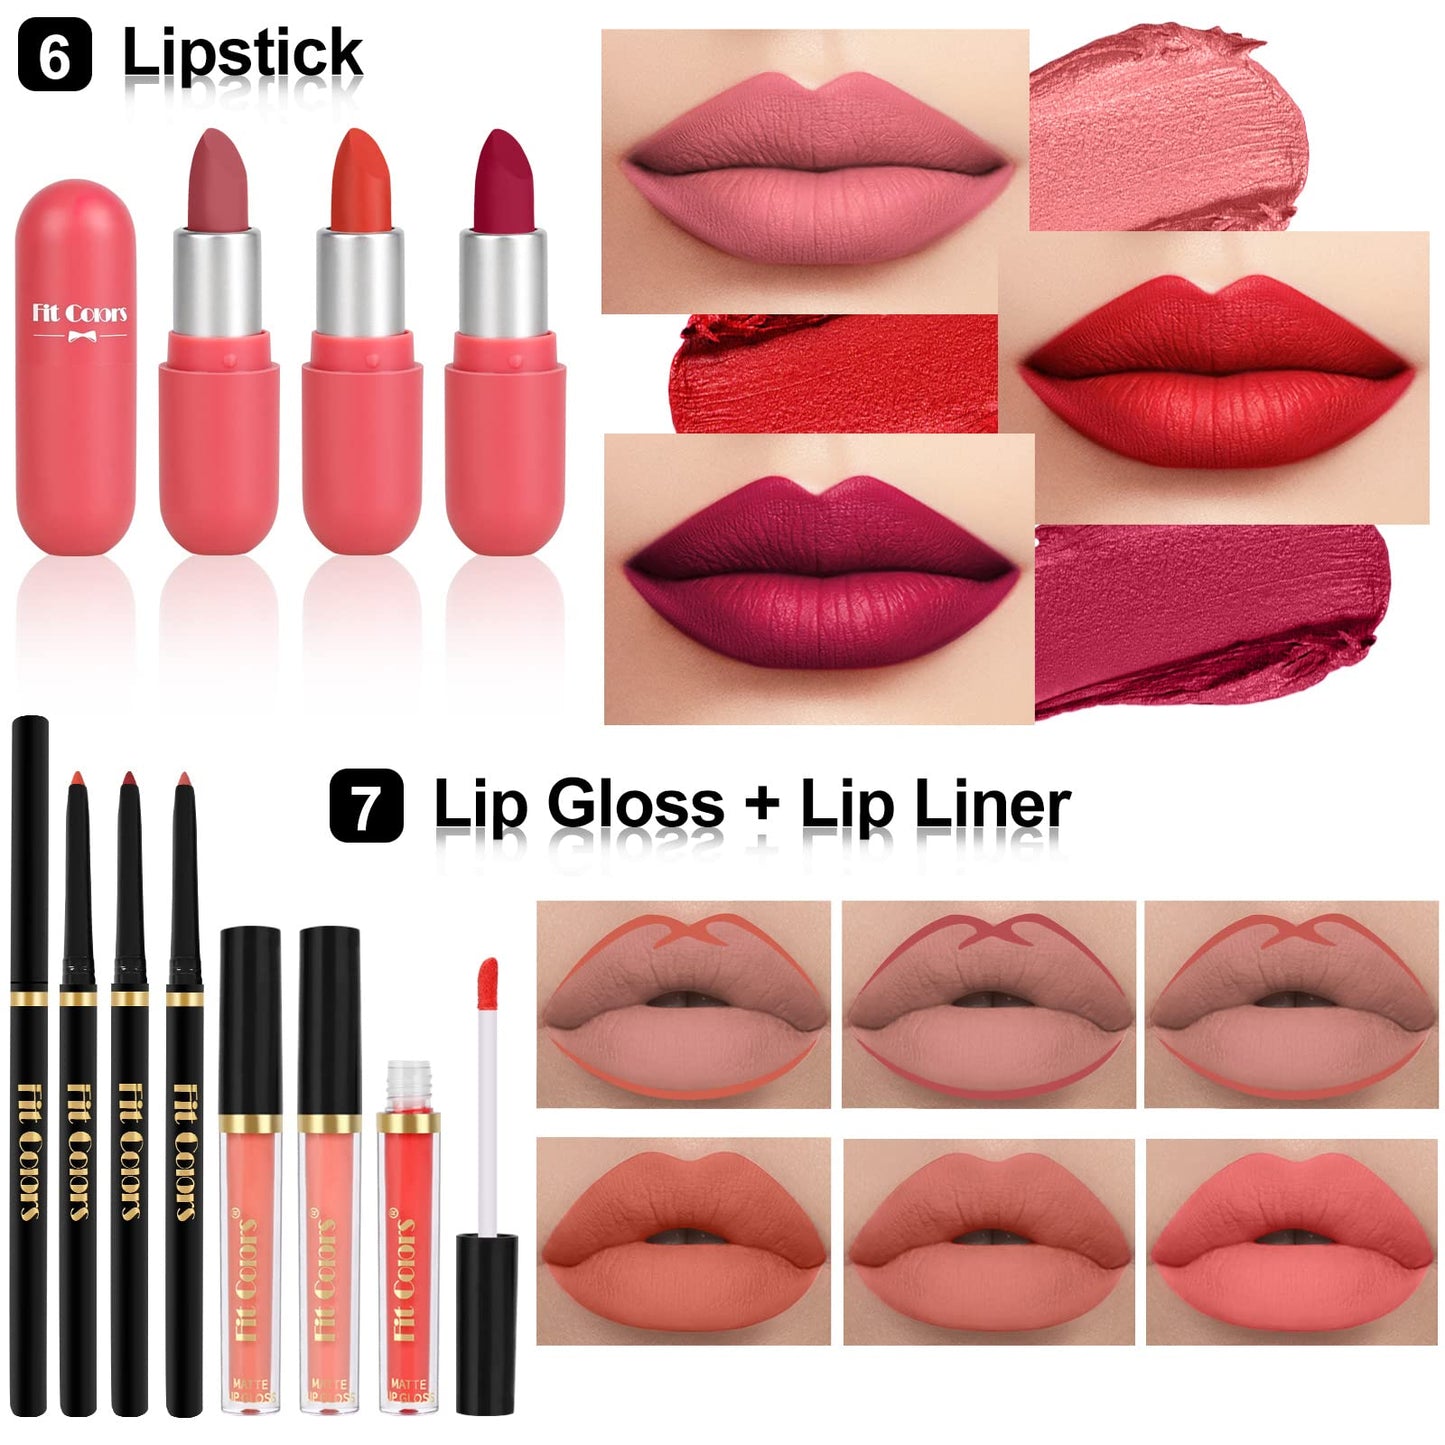 Fenshine Makeup Set,Make Up Starter Kit With Storage Bag Portable Travel Make Up Palette Eyeshadow Foundation Lip Gloss for Teenage & Adults (Type A)